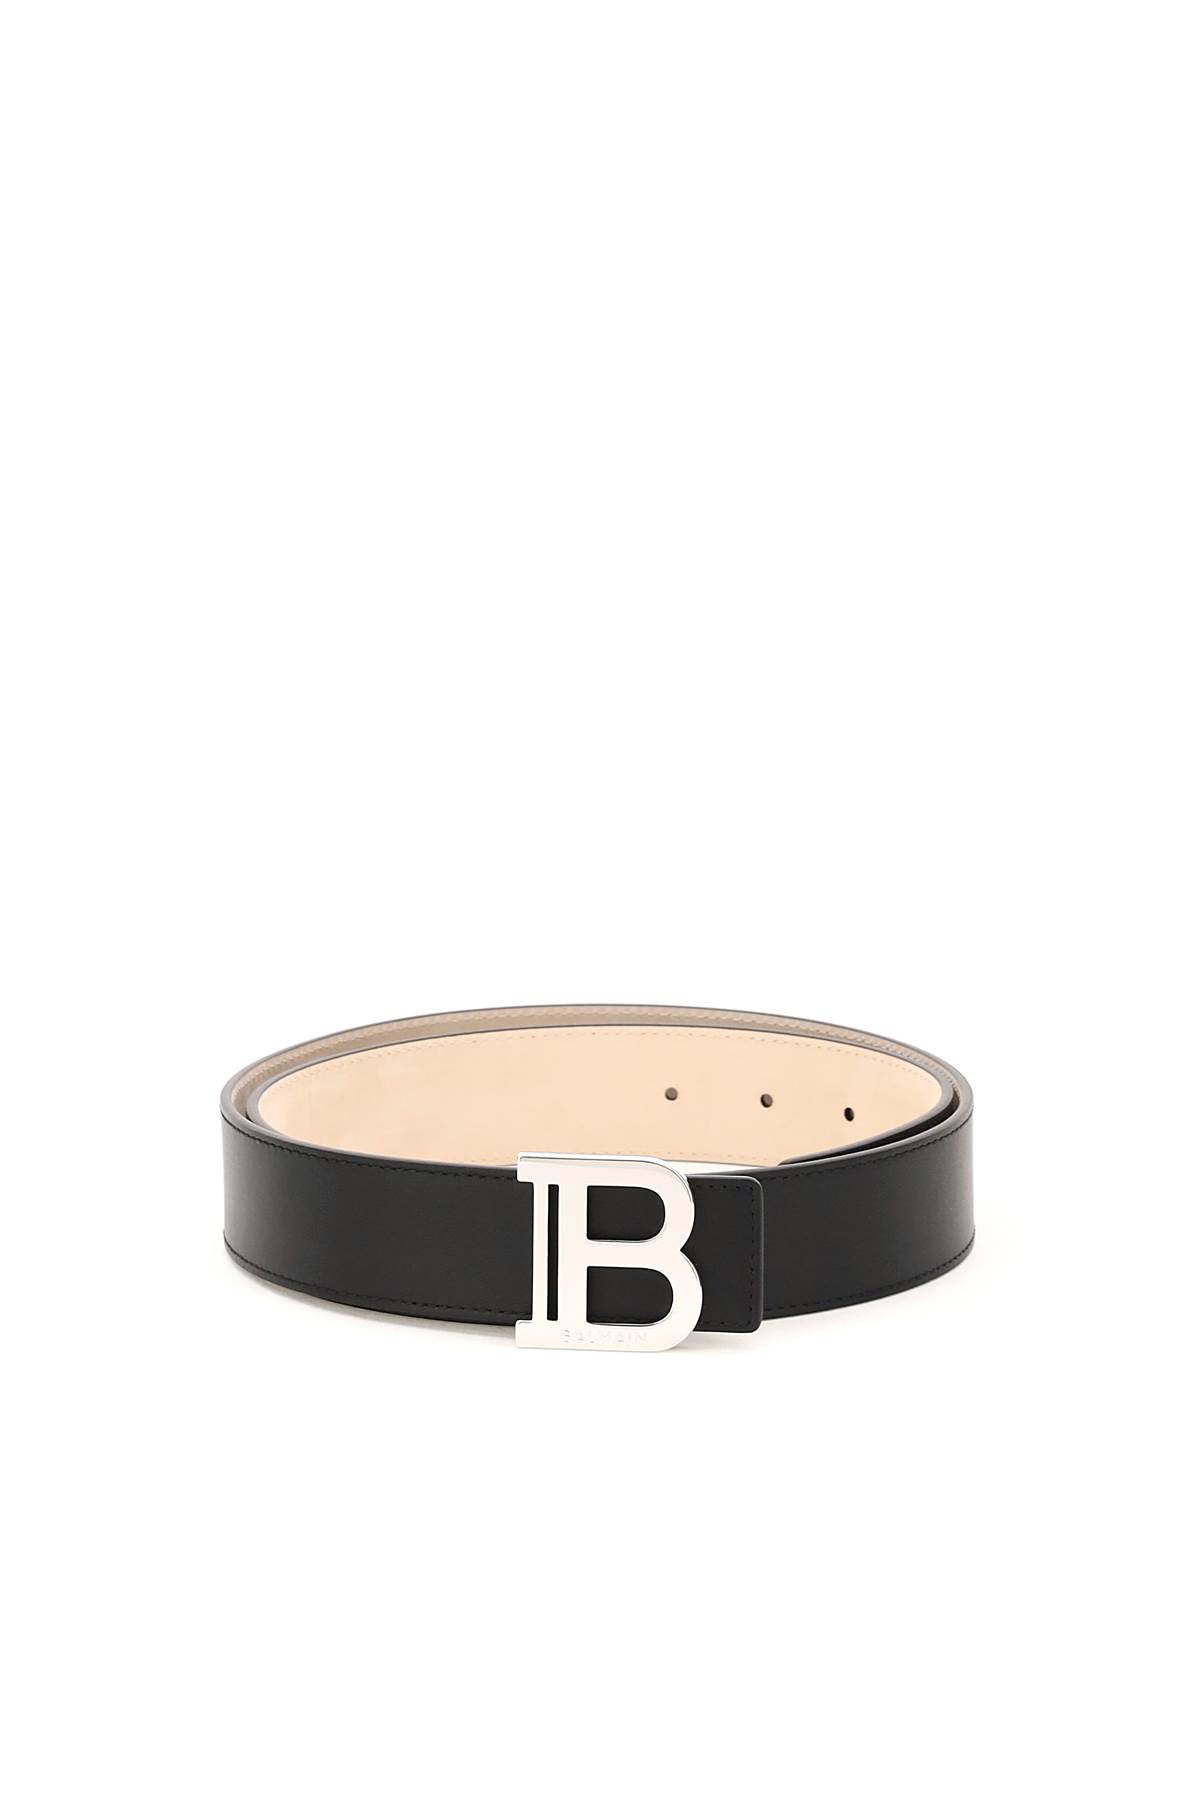 Balmain B-Belt Leather Belt-Balmain-Urbanheer